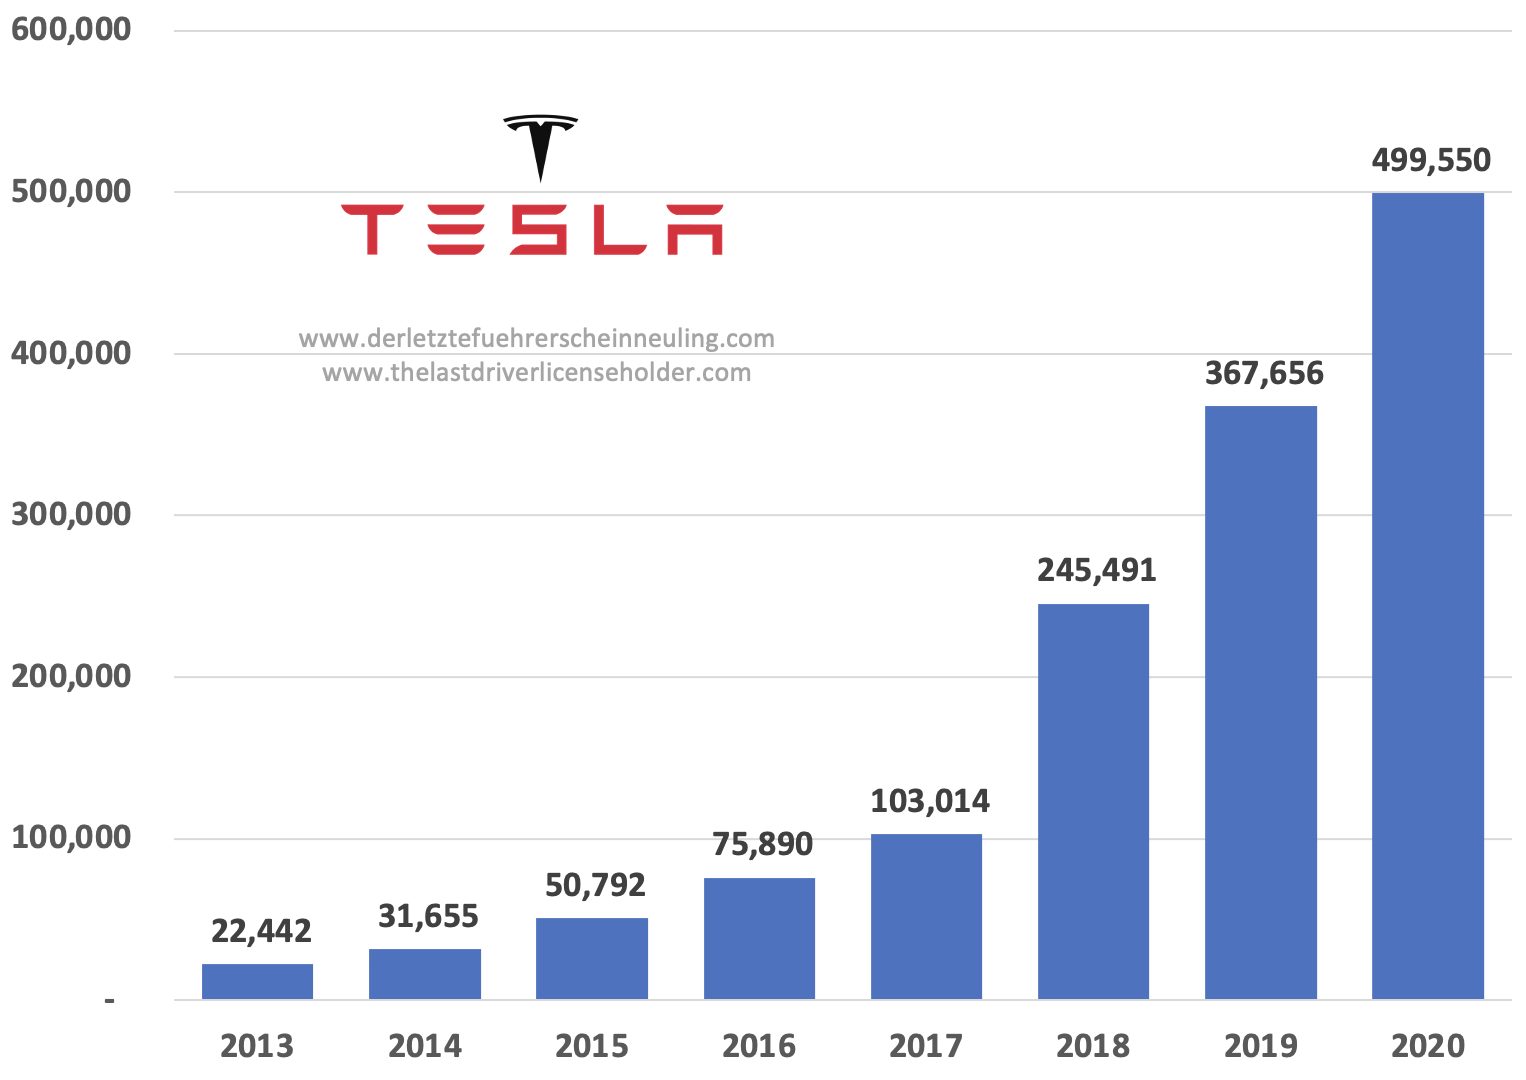 Tesla growth by year